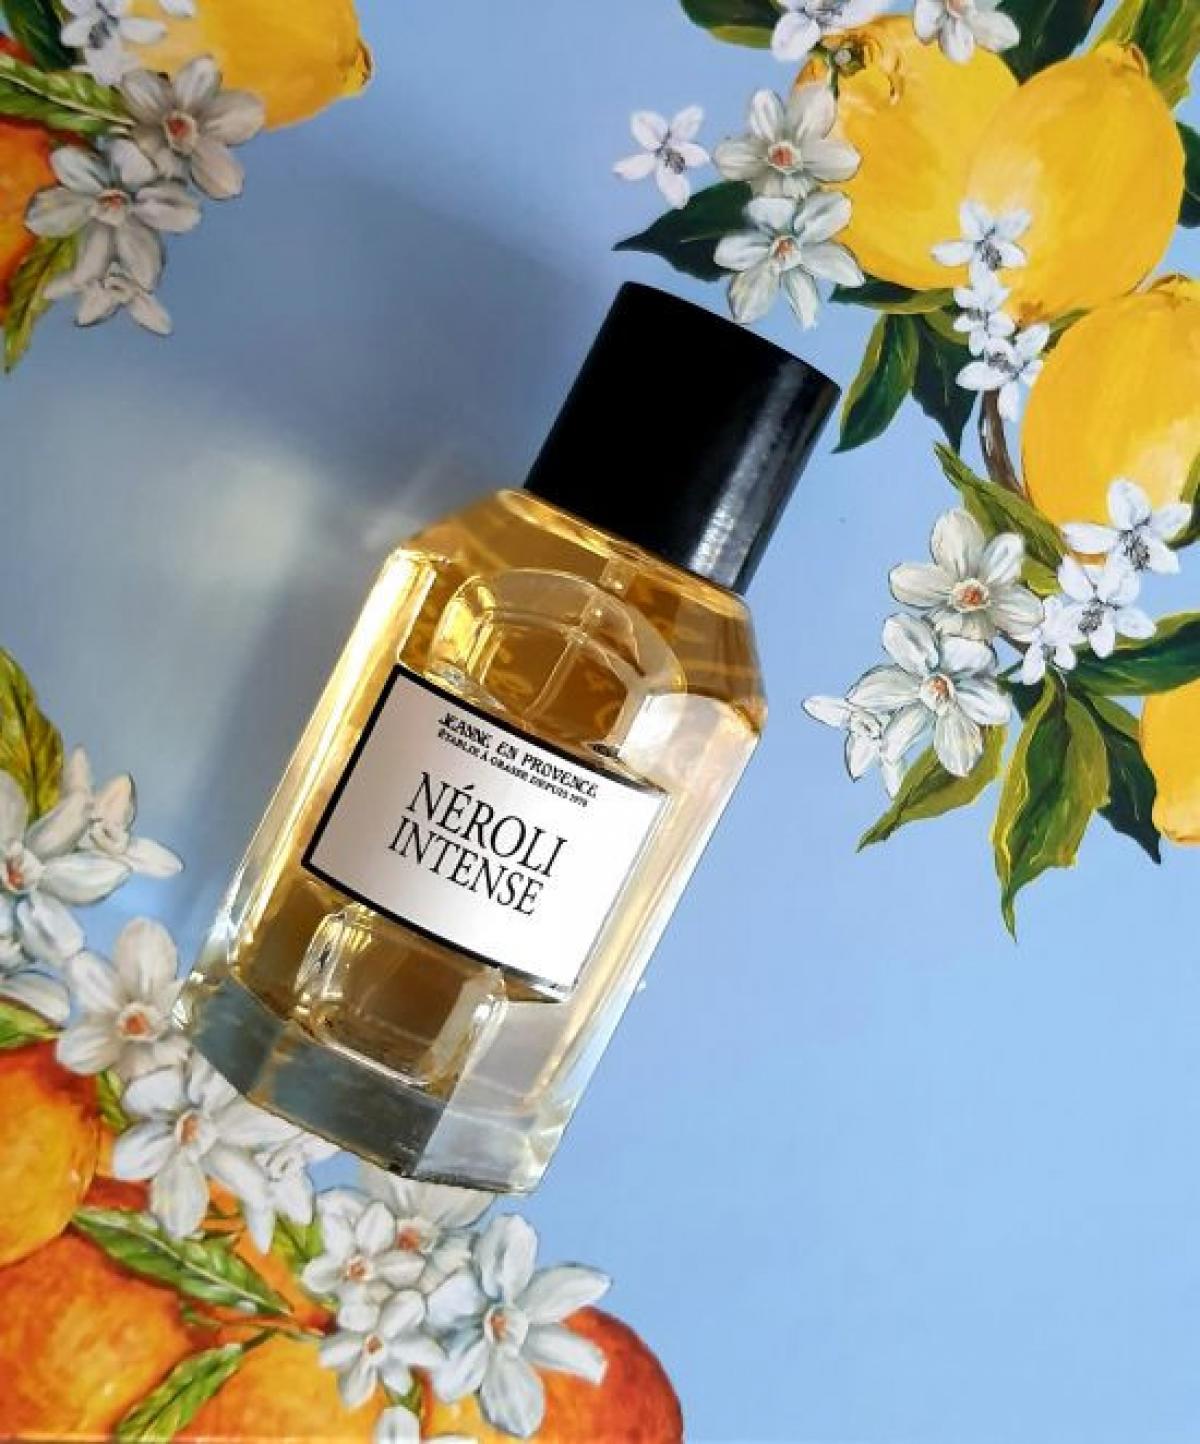 Néroli Intense Jeanne en Provence cologne - a new fragrance for men 2019